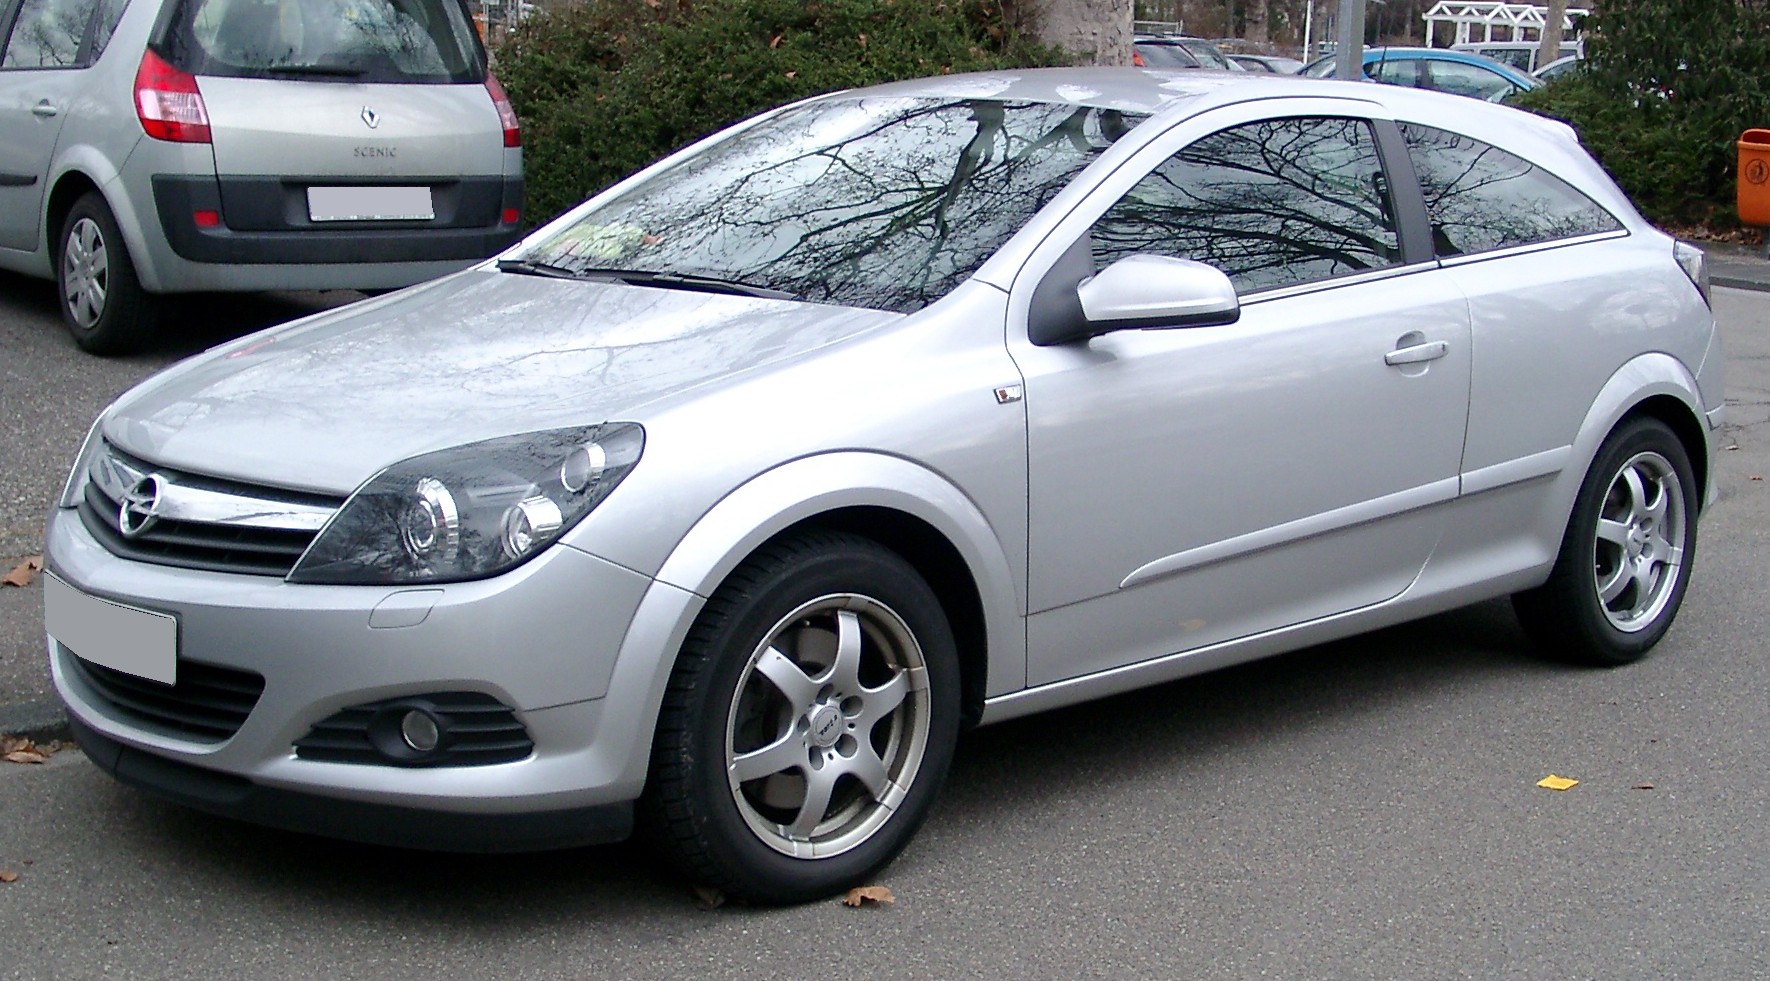 Dossier: Opel Astra H GTC avant 20080226.jpg